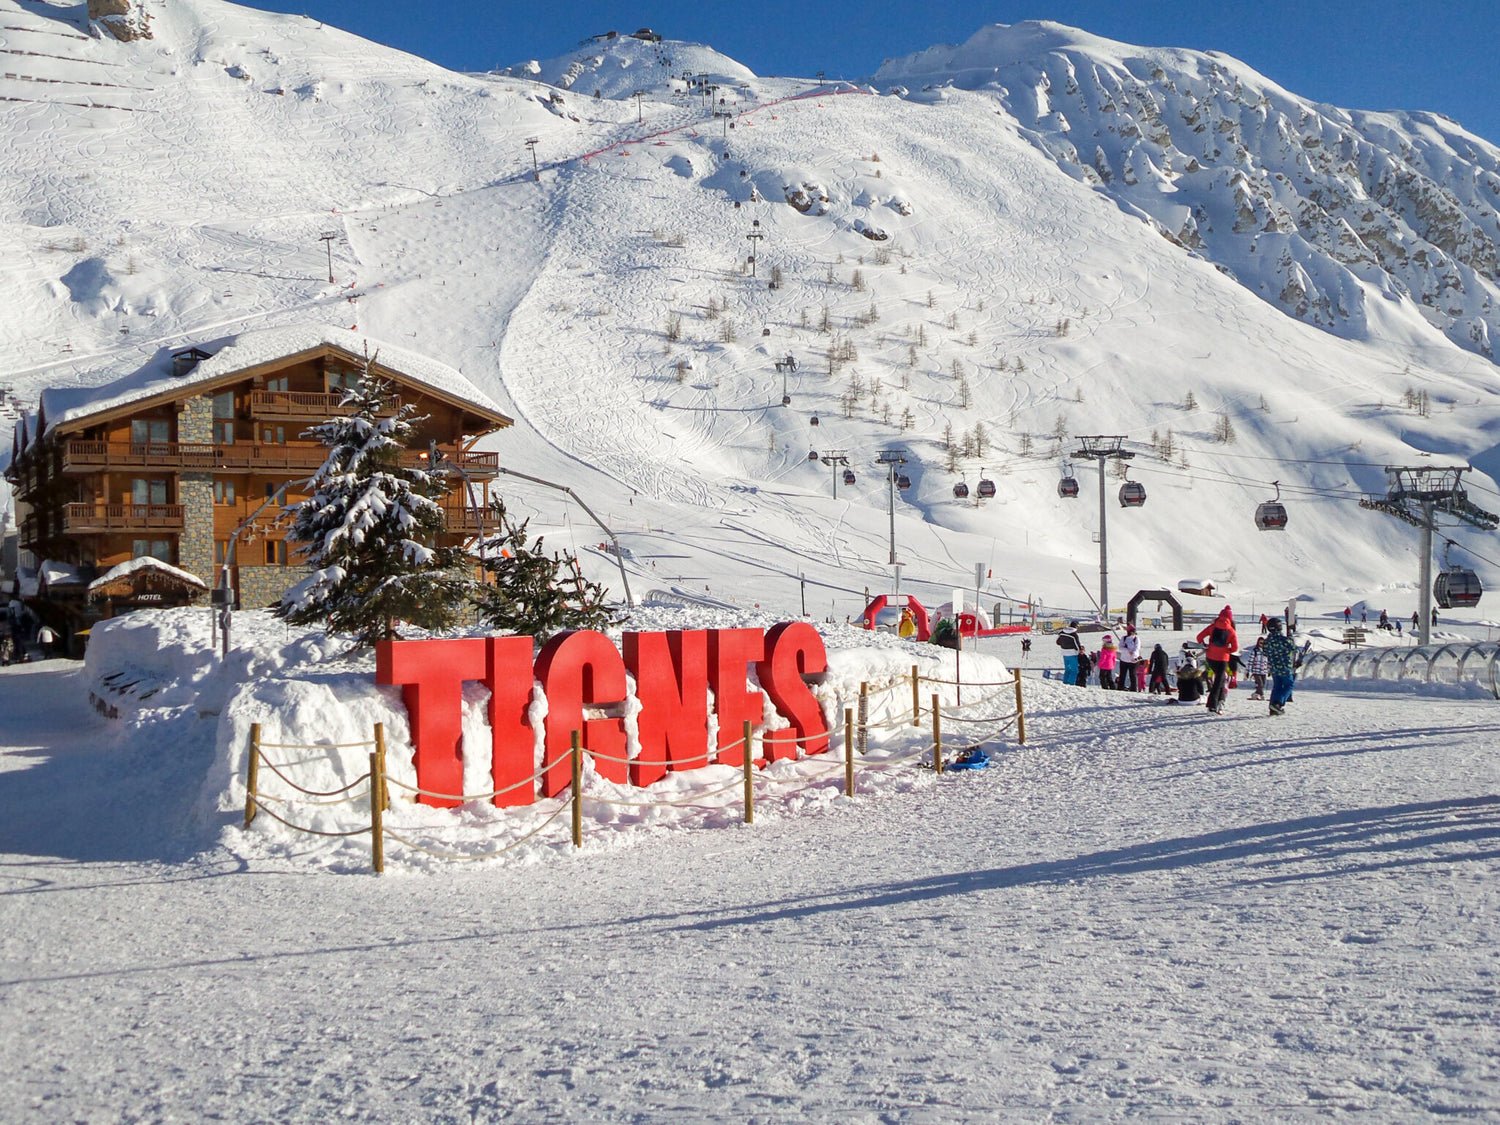 Station de Ski "Tignes"